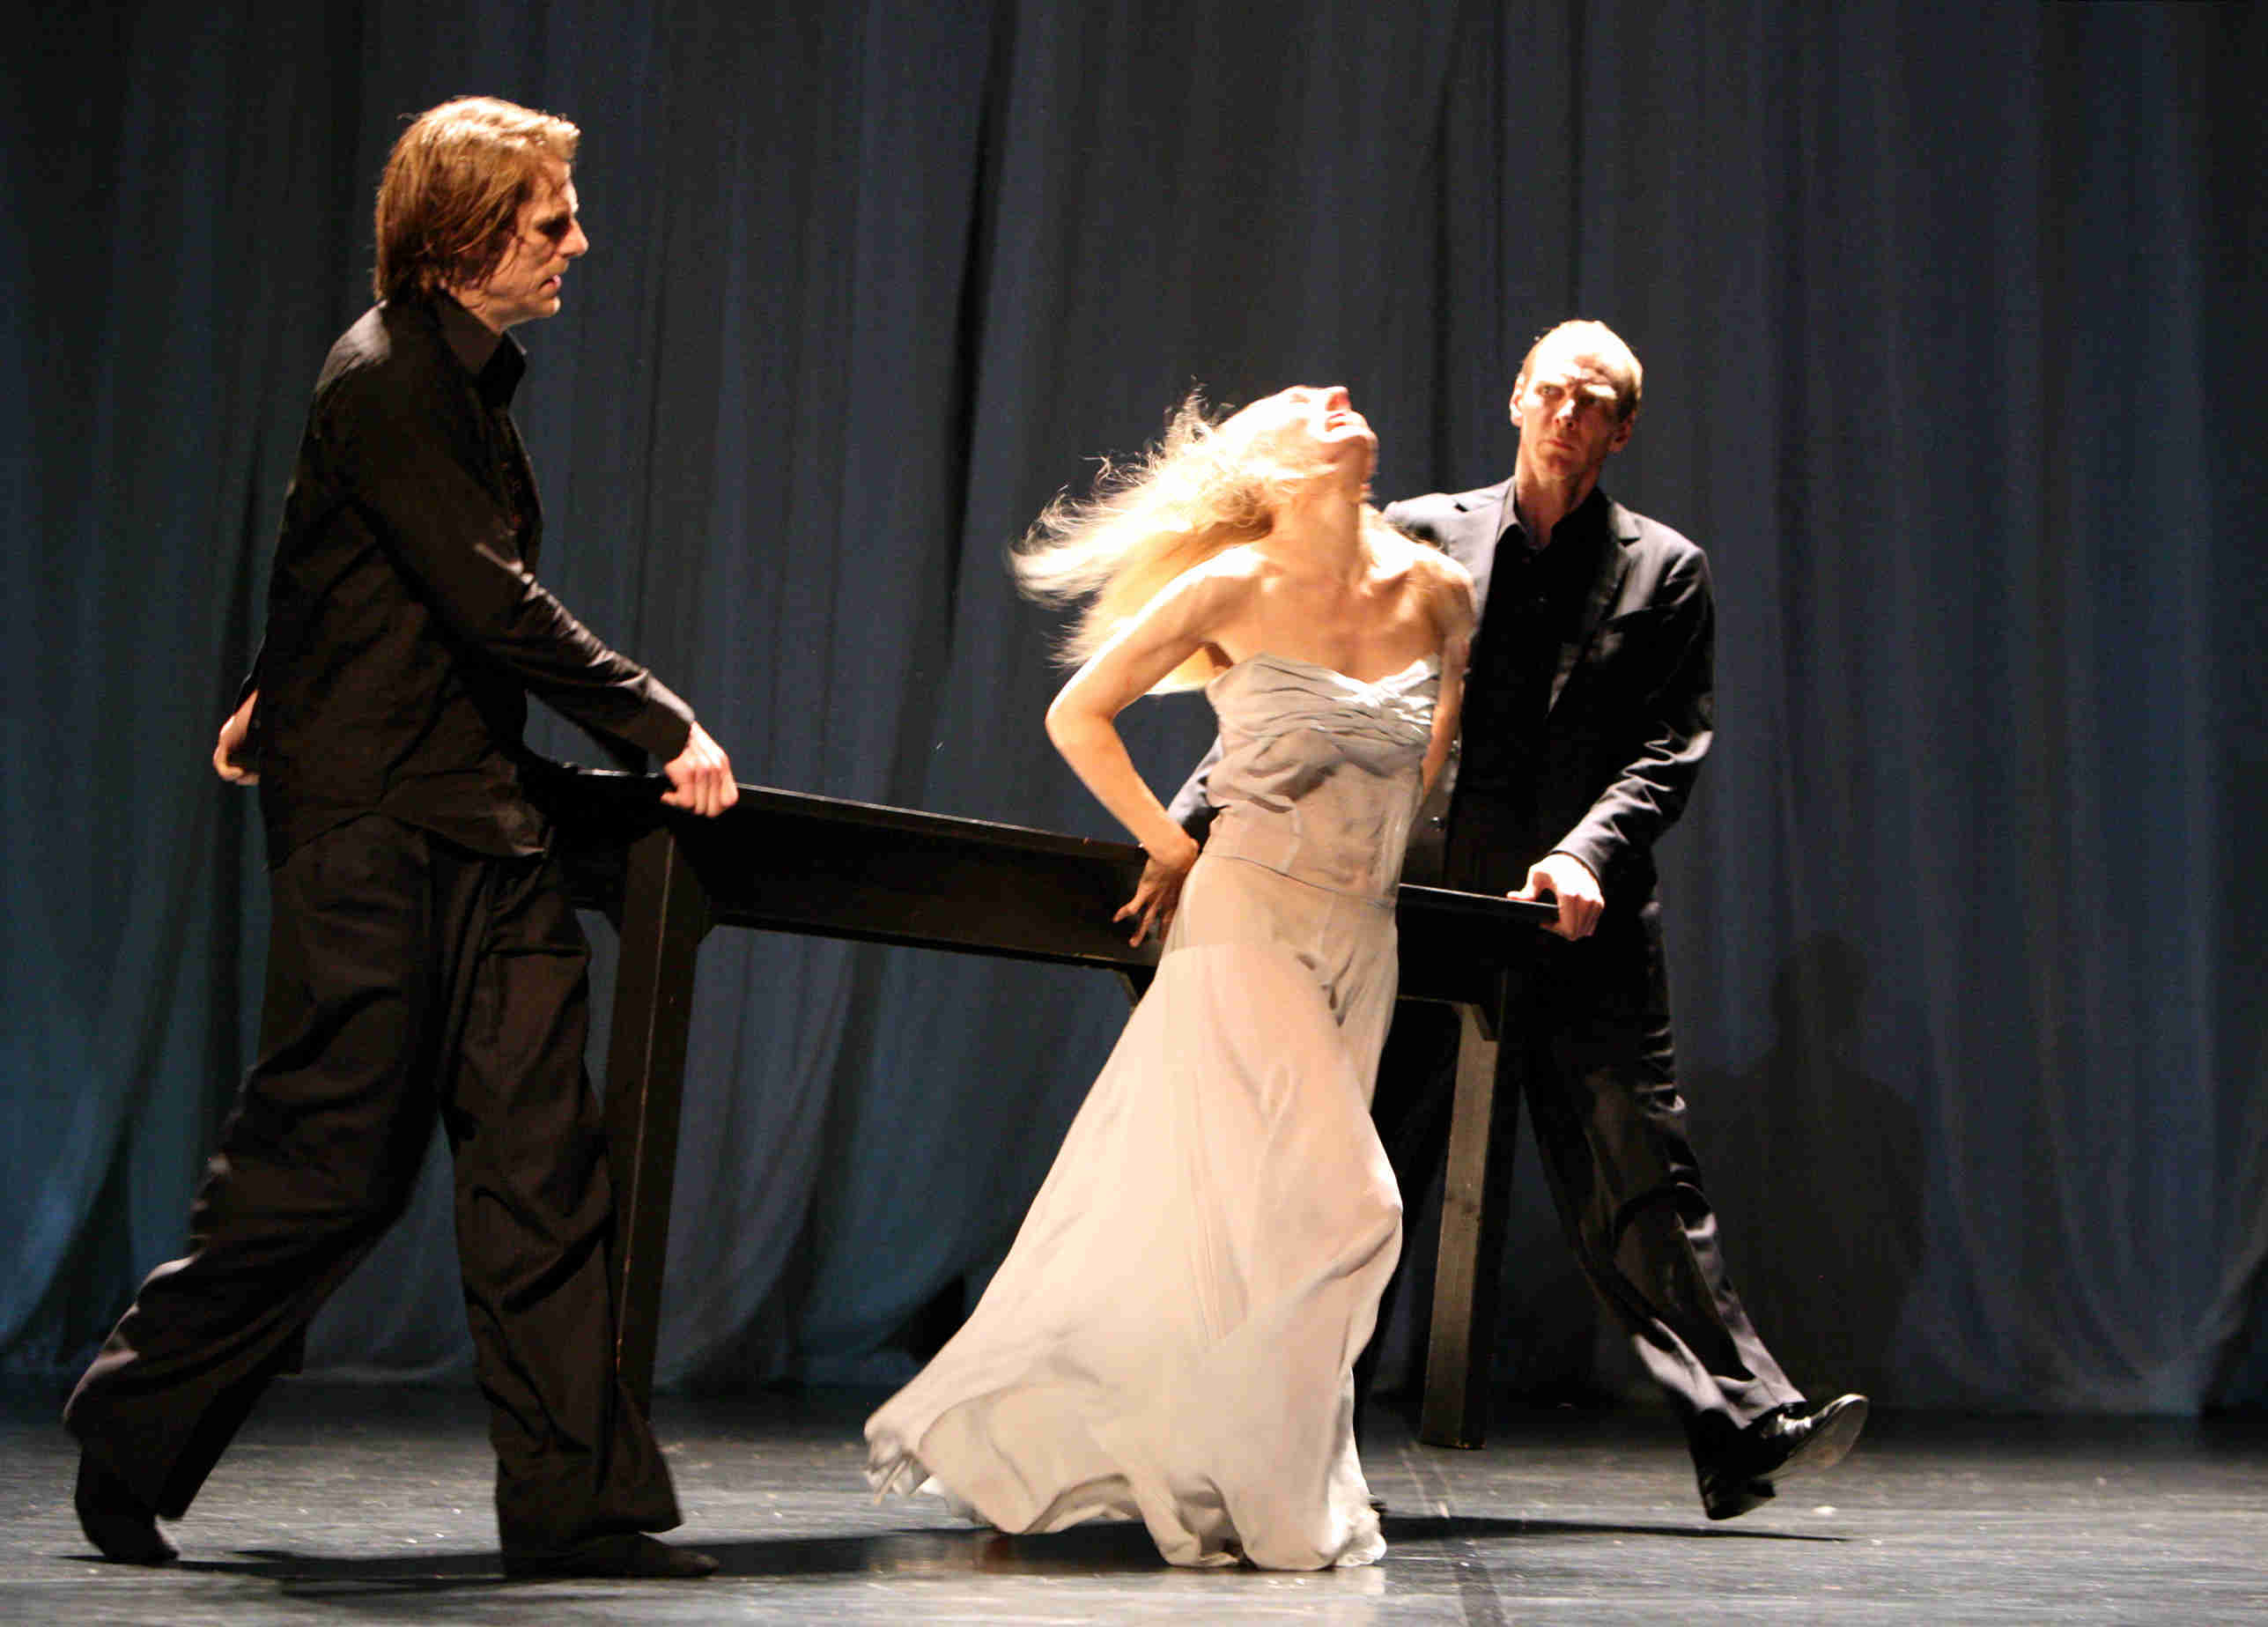 Michael Strecker, Julie Shanahan and Andrey Berezin of Tanztheater Wuppertal Pina Bausch in Sweet Mambo